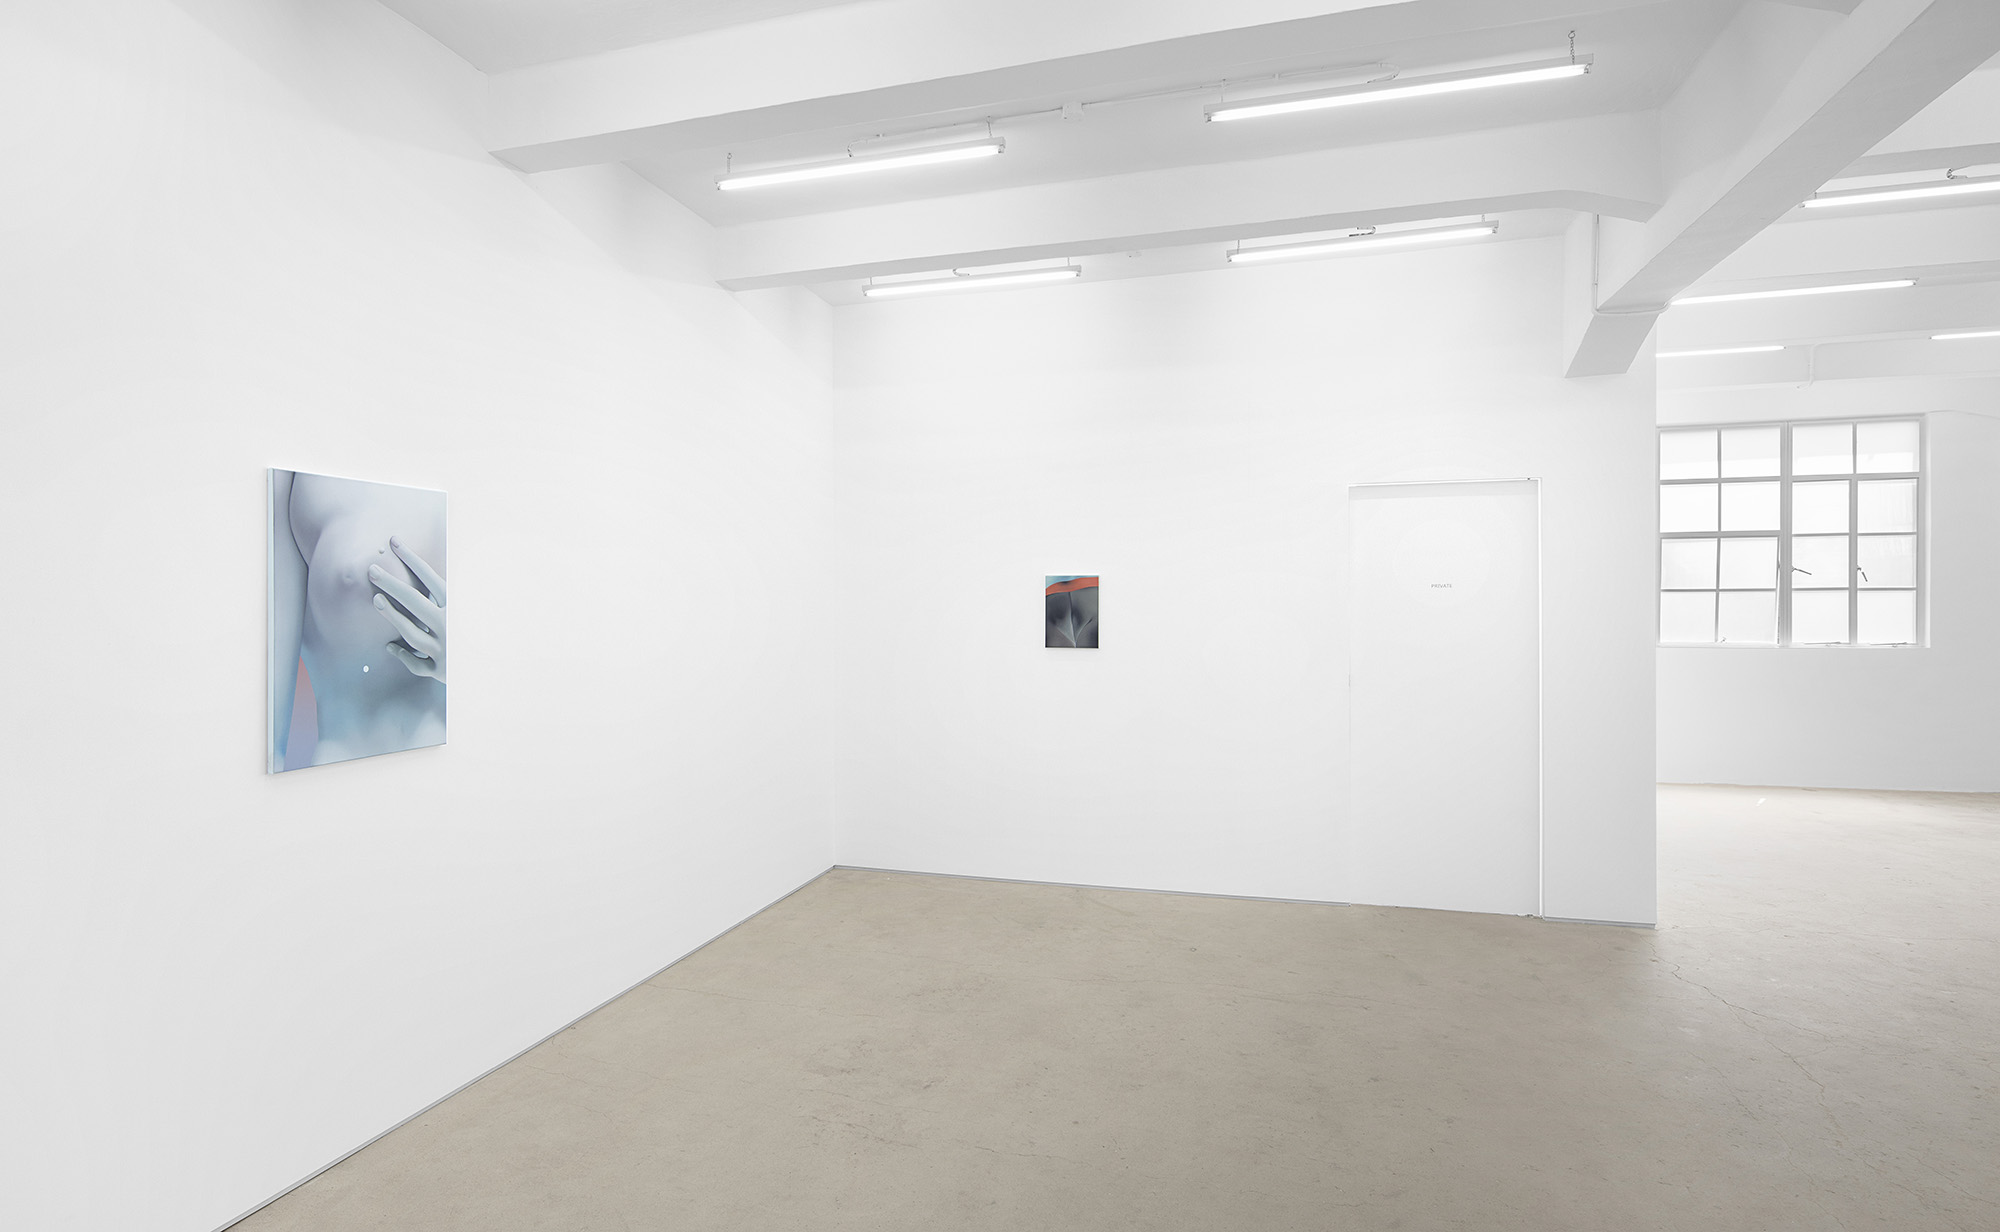 Vivian Greven, The Negatives, solo exhibition at Gallery Vacancy, installation view 18